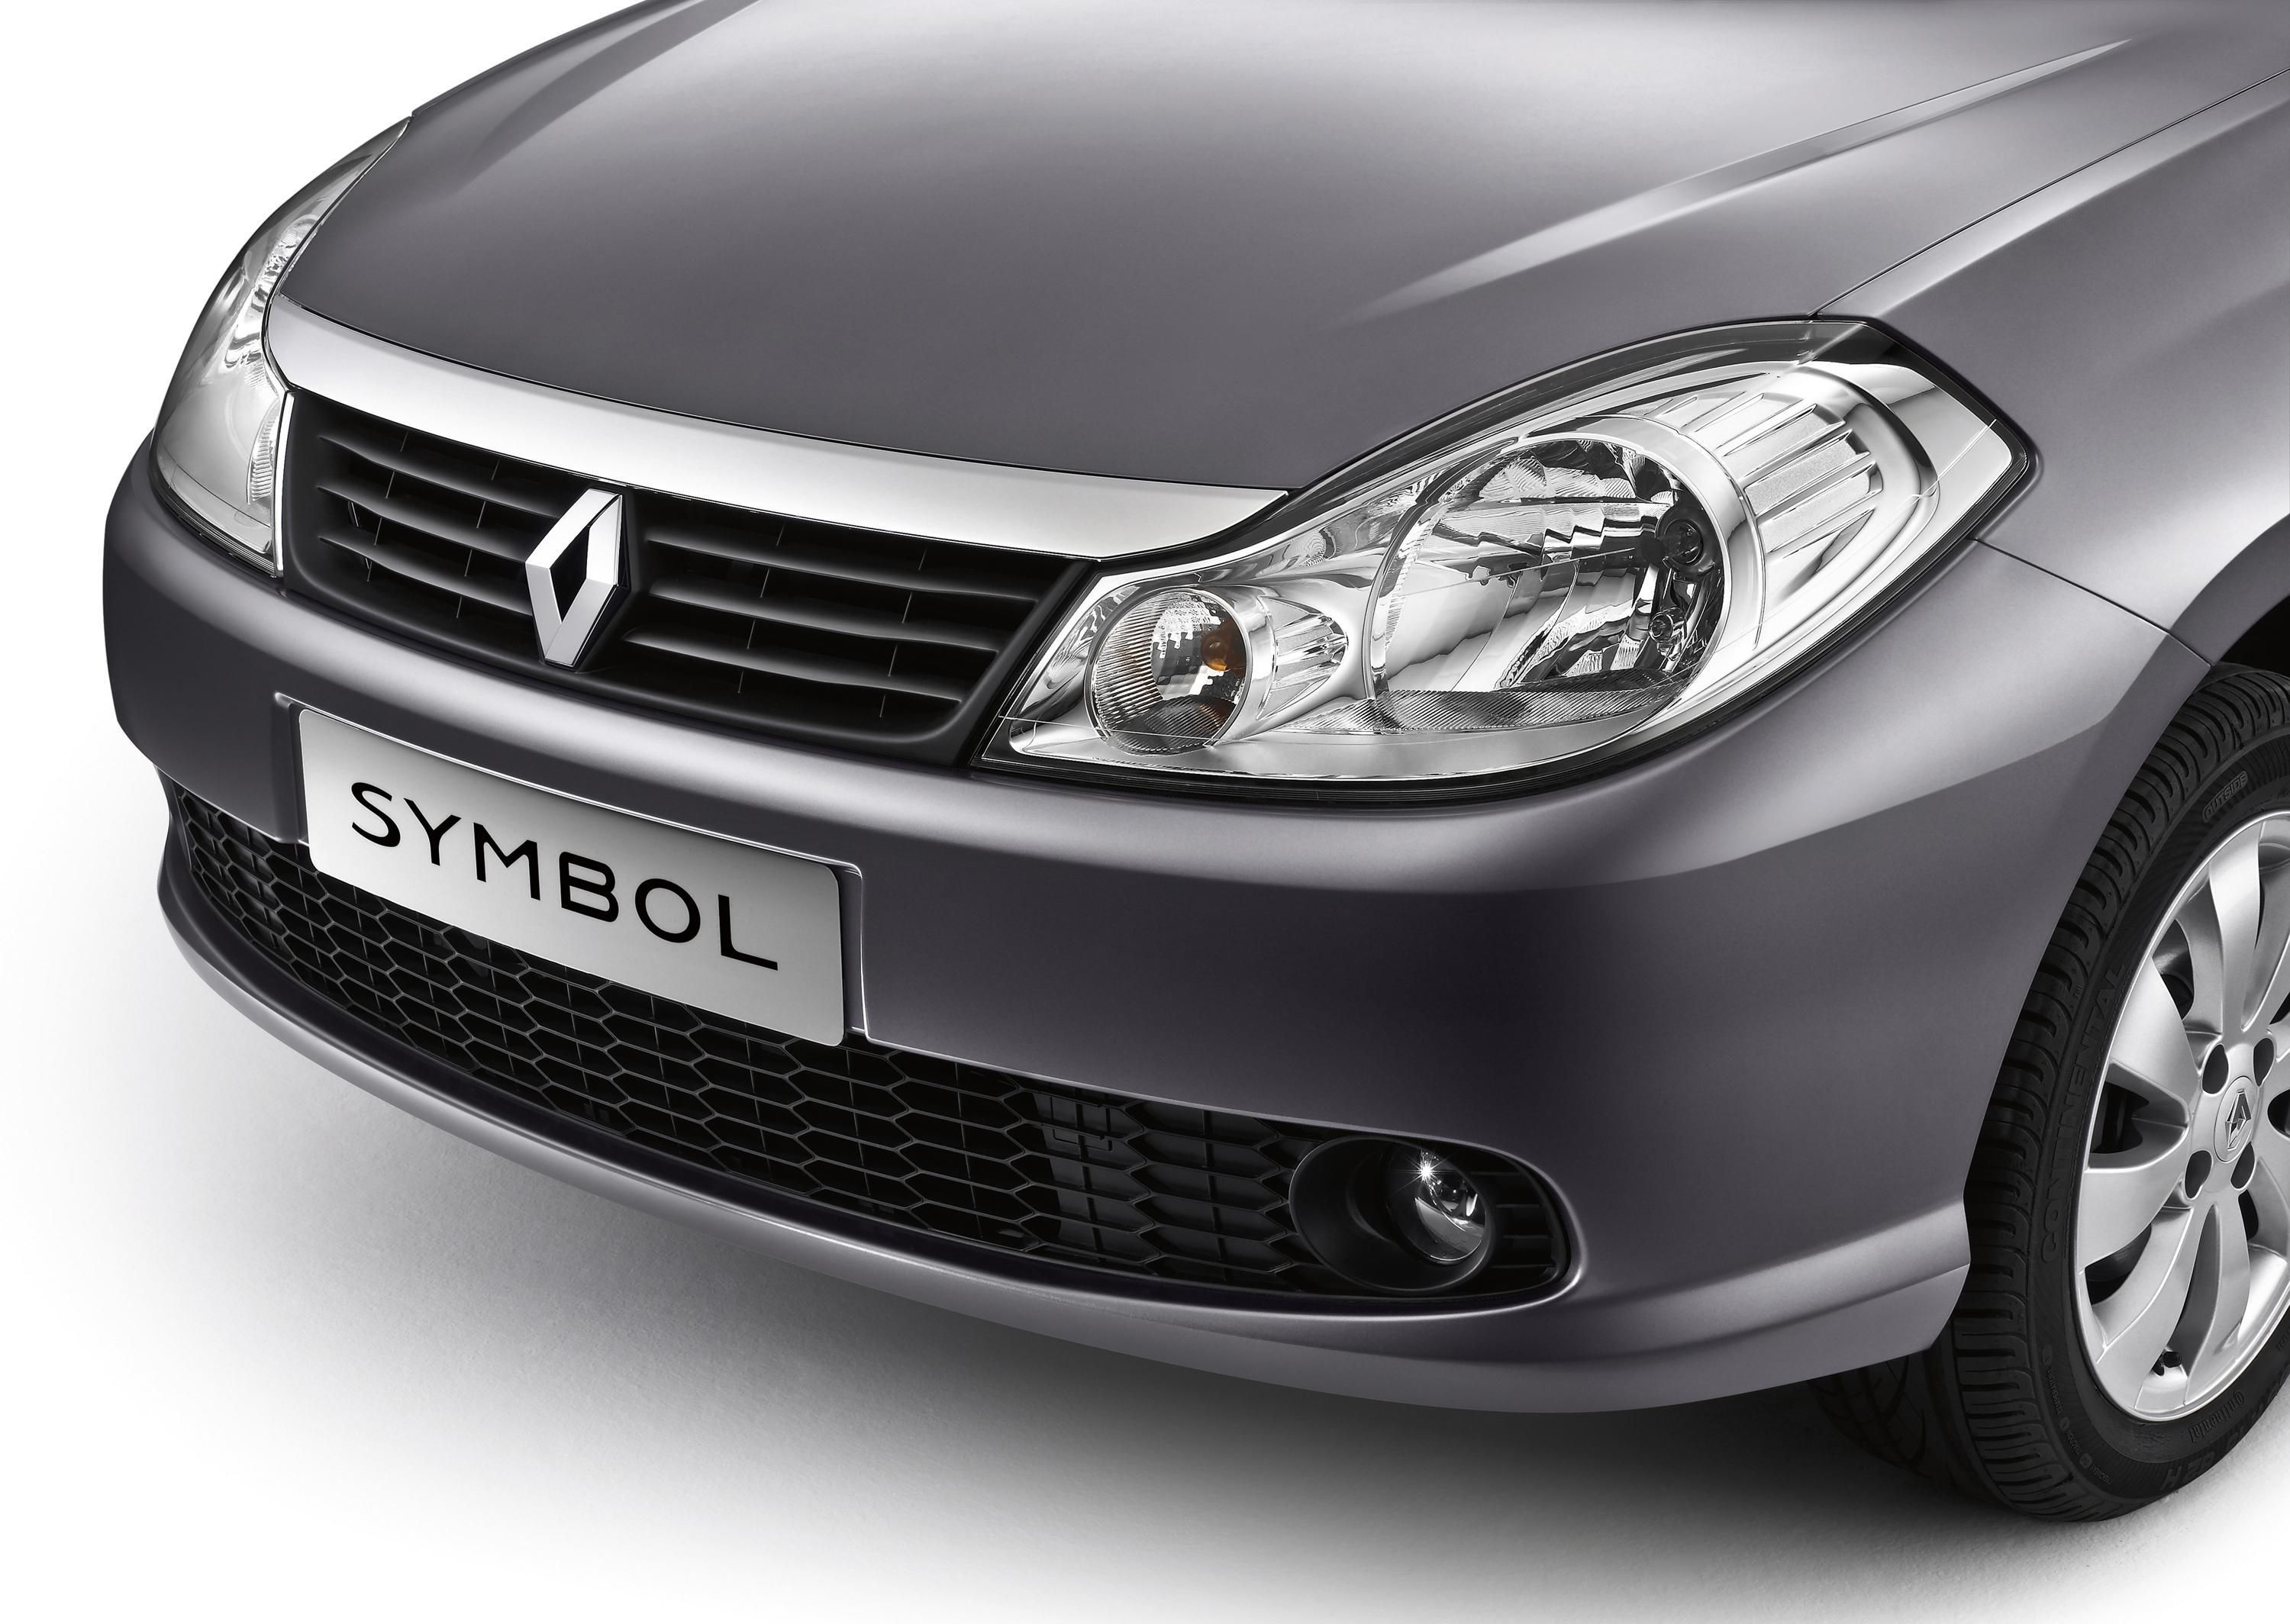 2009 Renault Symbol